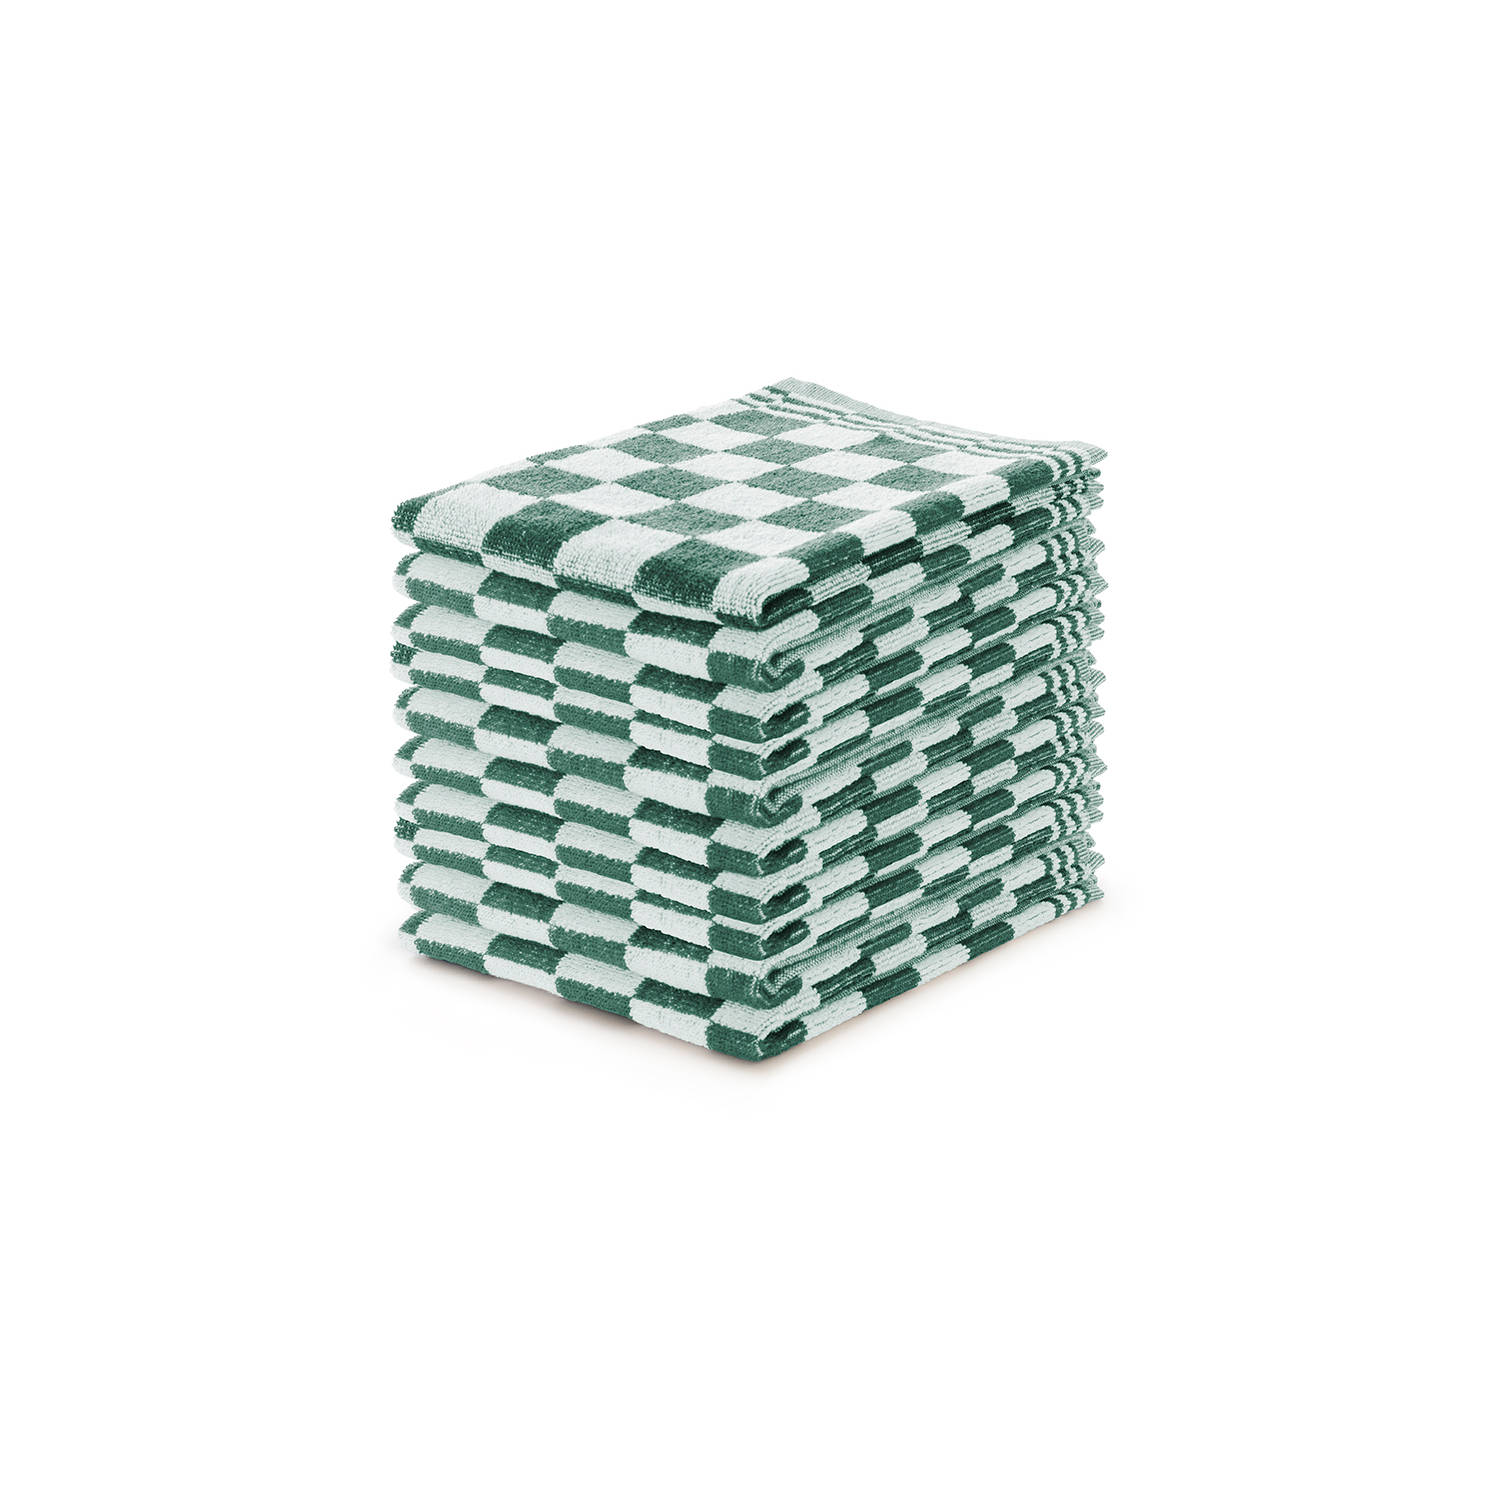 Elegance Keukendoekset Blok 50x50cm - donker groen - set van 10